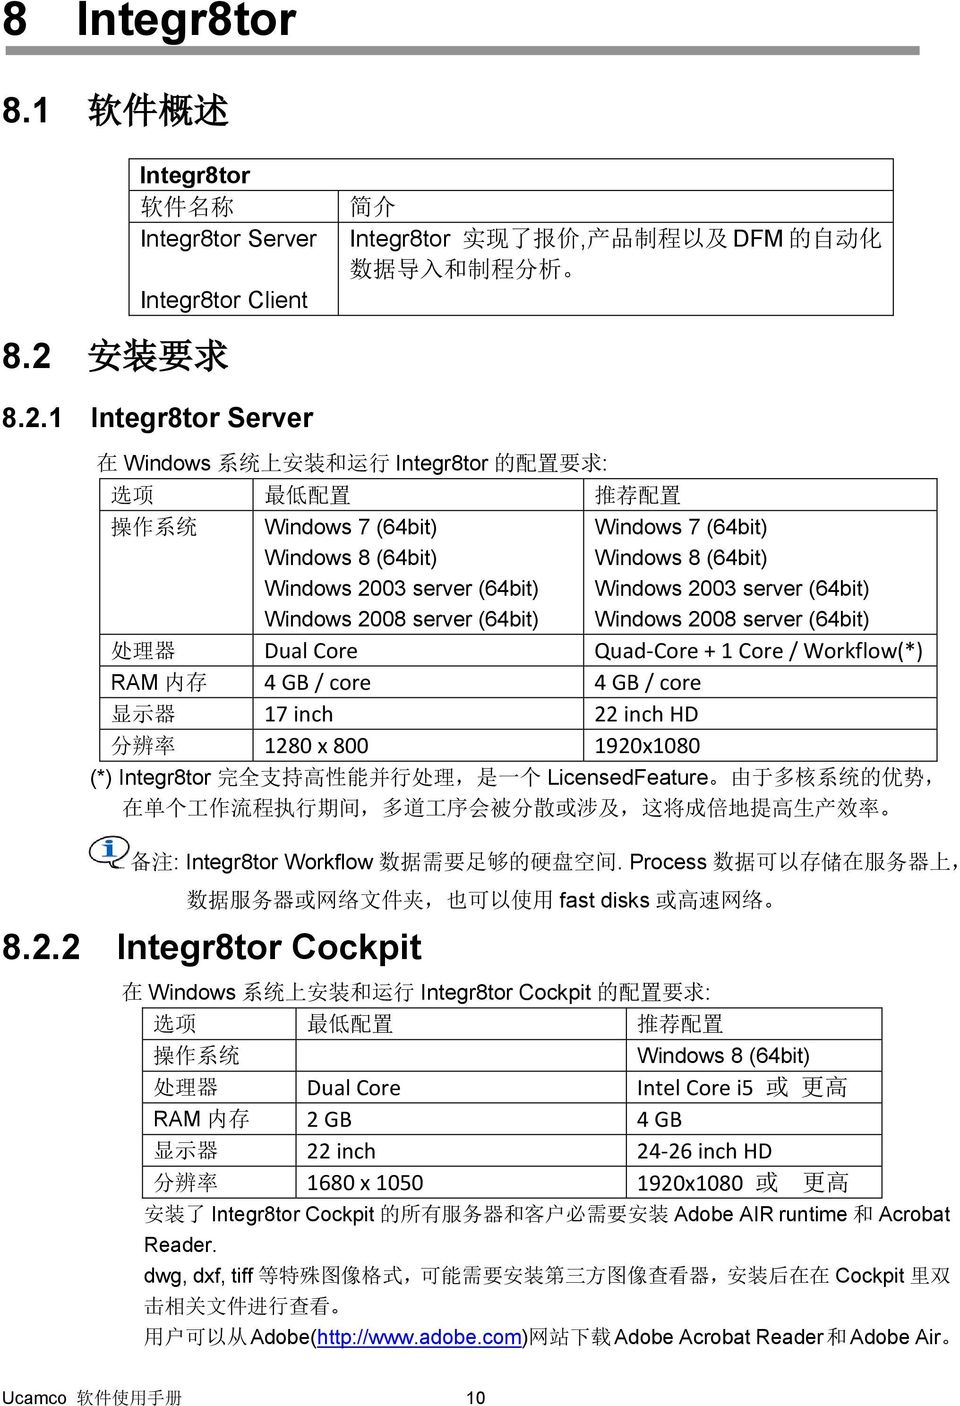 1 Integr8tor Server 在 Windows 系统上安装和运行 Integr8tor 的配置要求 : 选项最低配置推荐配置 操作系统 Windows 7 (64bit) Windows 8 (64bit) Windows 2003 server (64bit) Windows 2008 server (64bit) Windows 7 (64bit) Windows 8